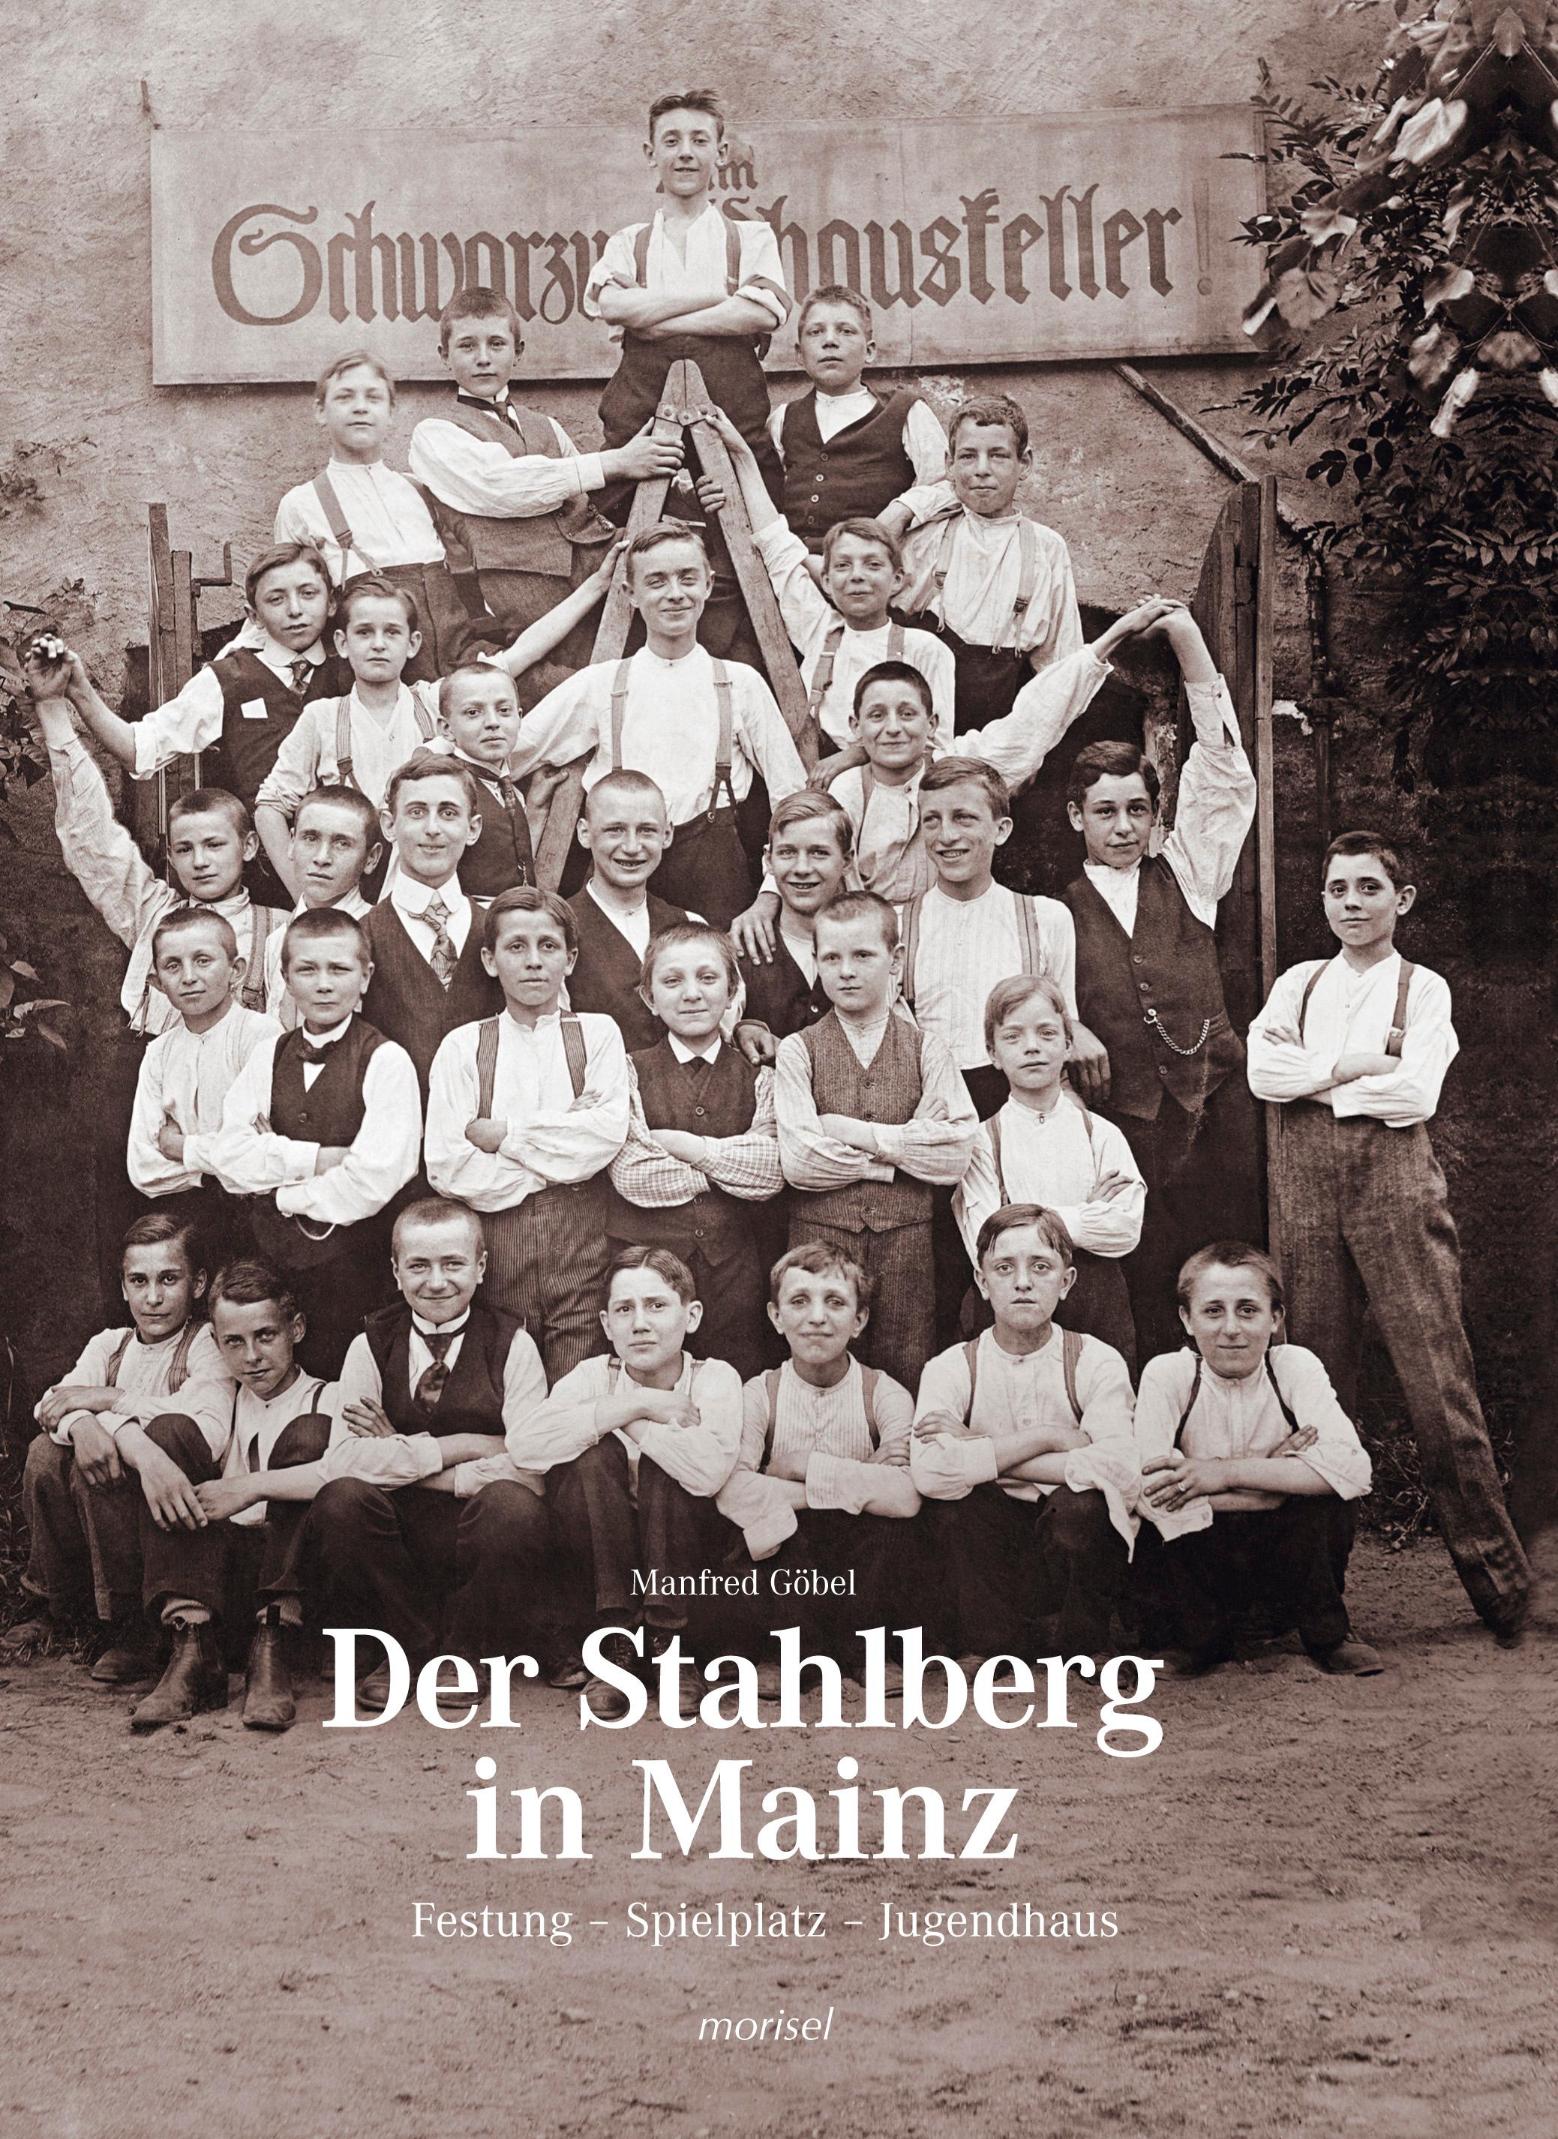 Cover-Jugendhaus-Stahlberg-Mainz.jpg_624146730 (c) Morisel Verlag